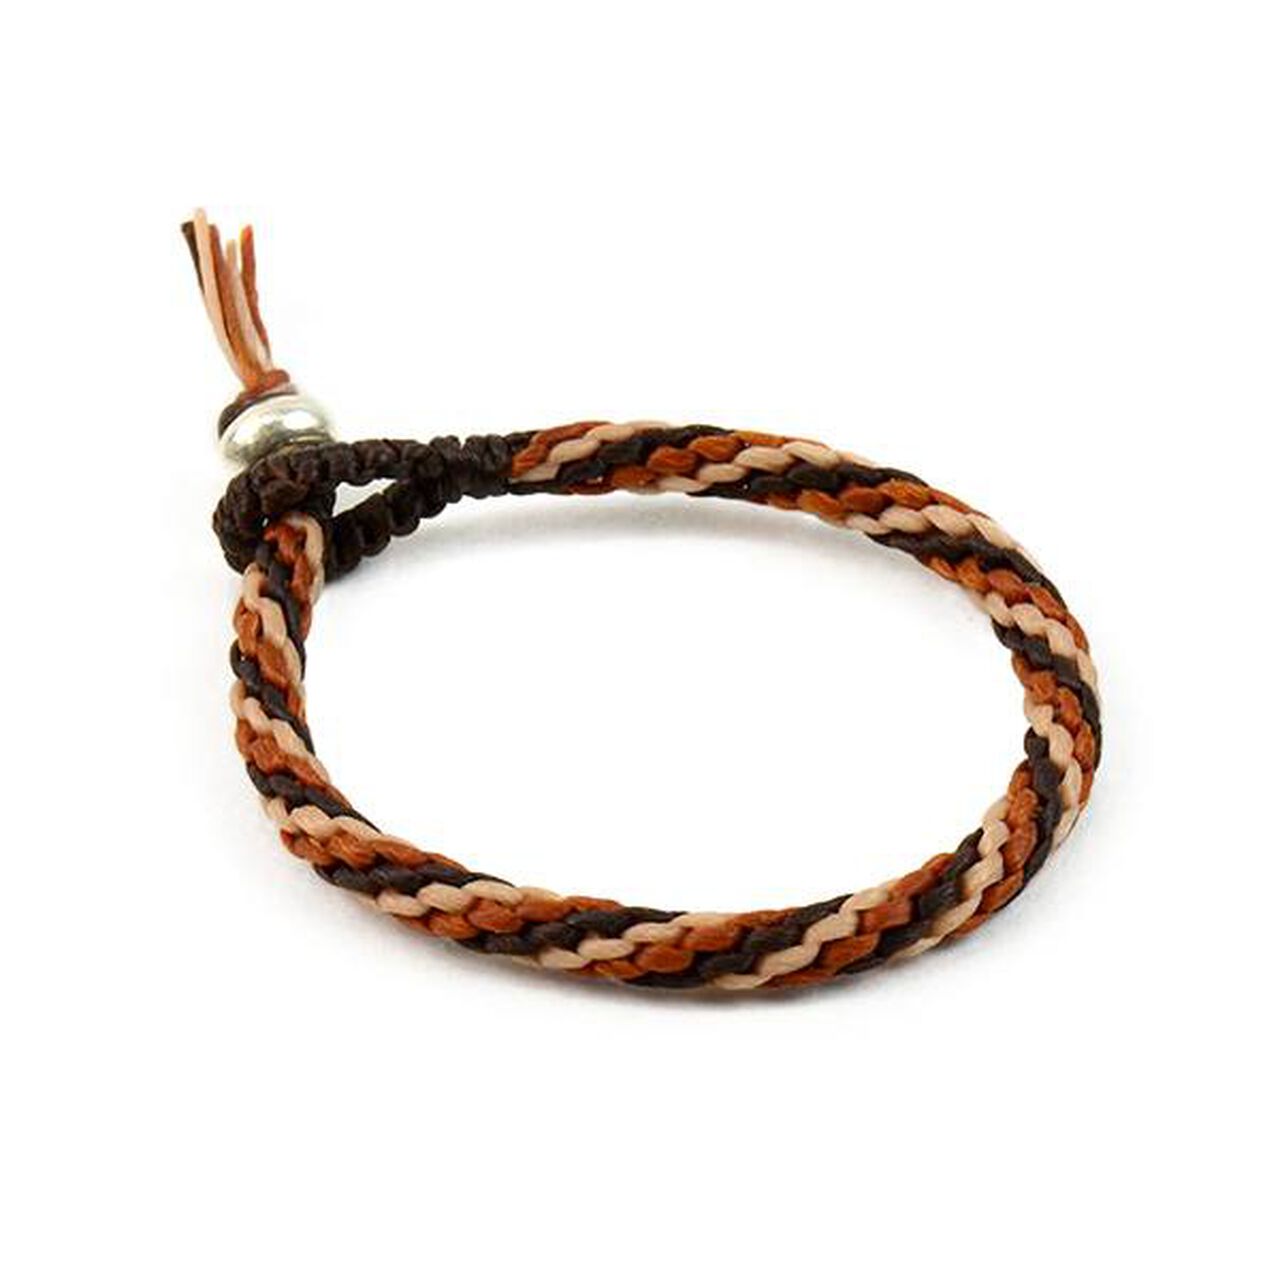 Spiral Coloured Braid Wax Cord Bracelet,Brown_LightBrown_Beige, large image number 0